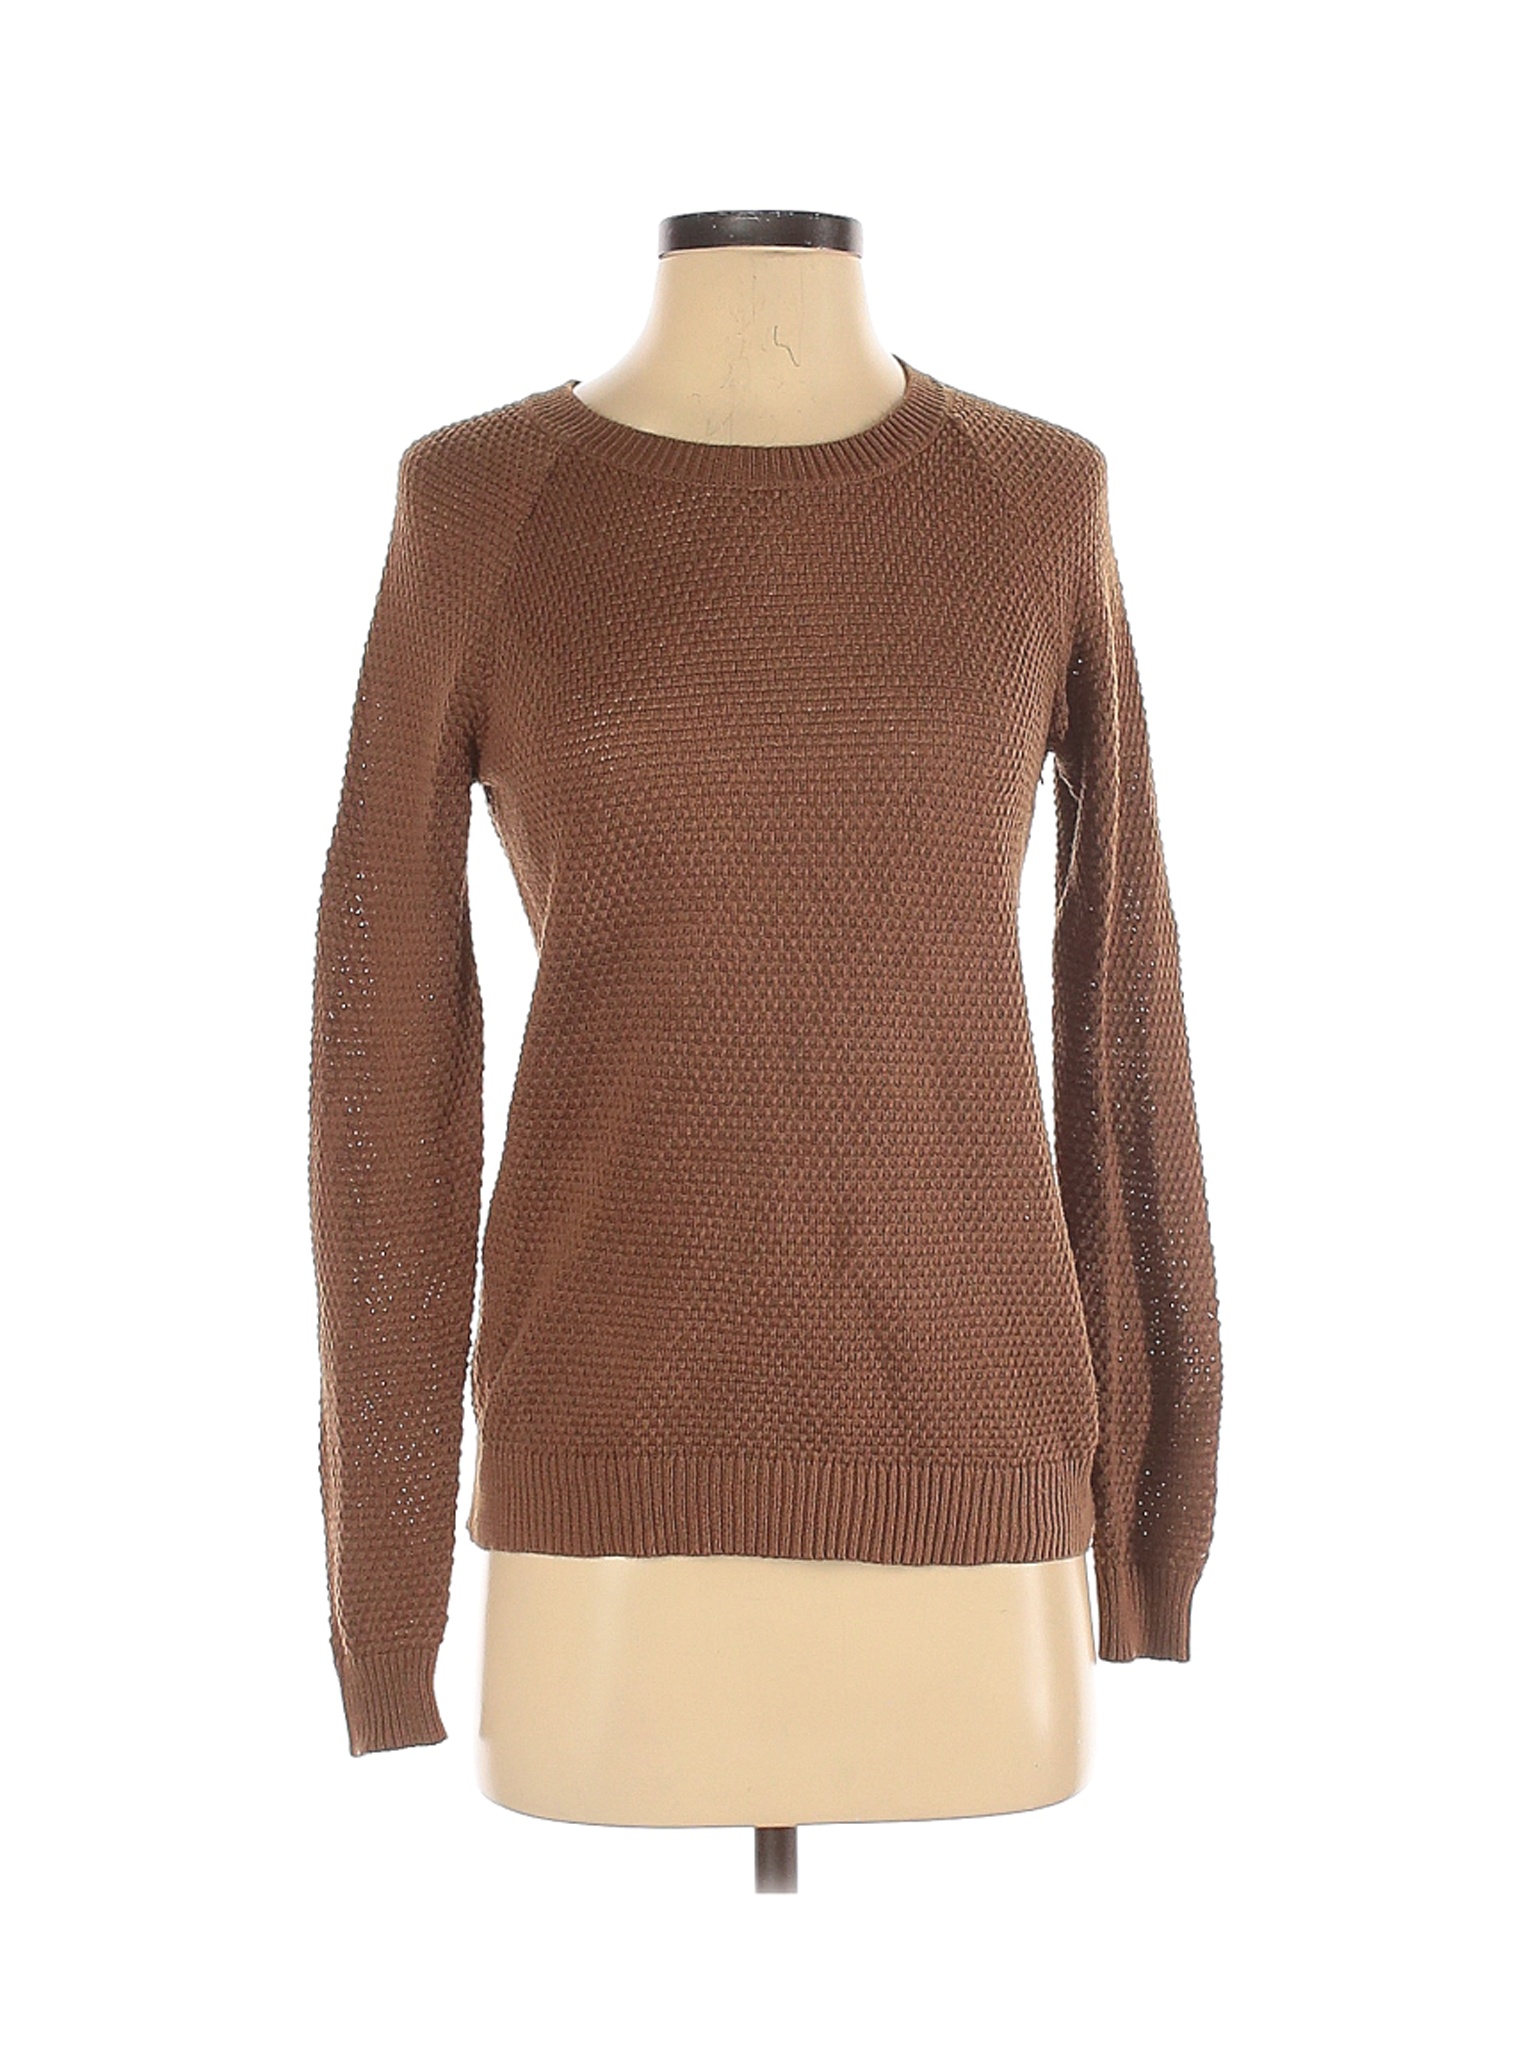 Old Navy Women Brown Pullover Sweater S | eBay